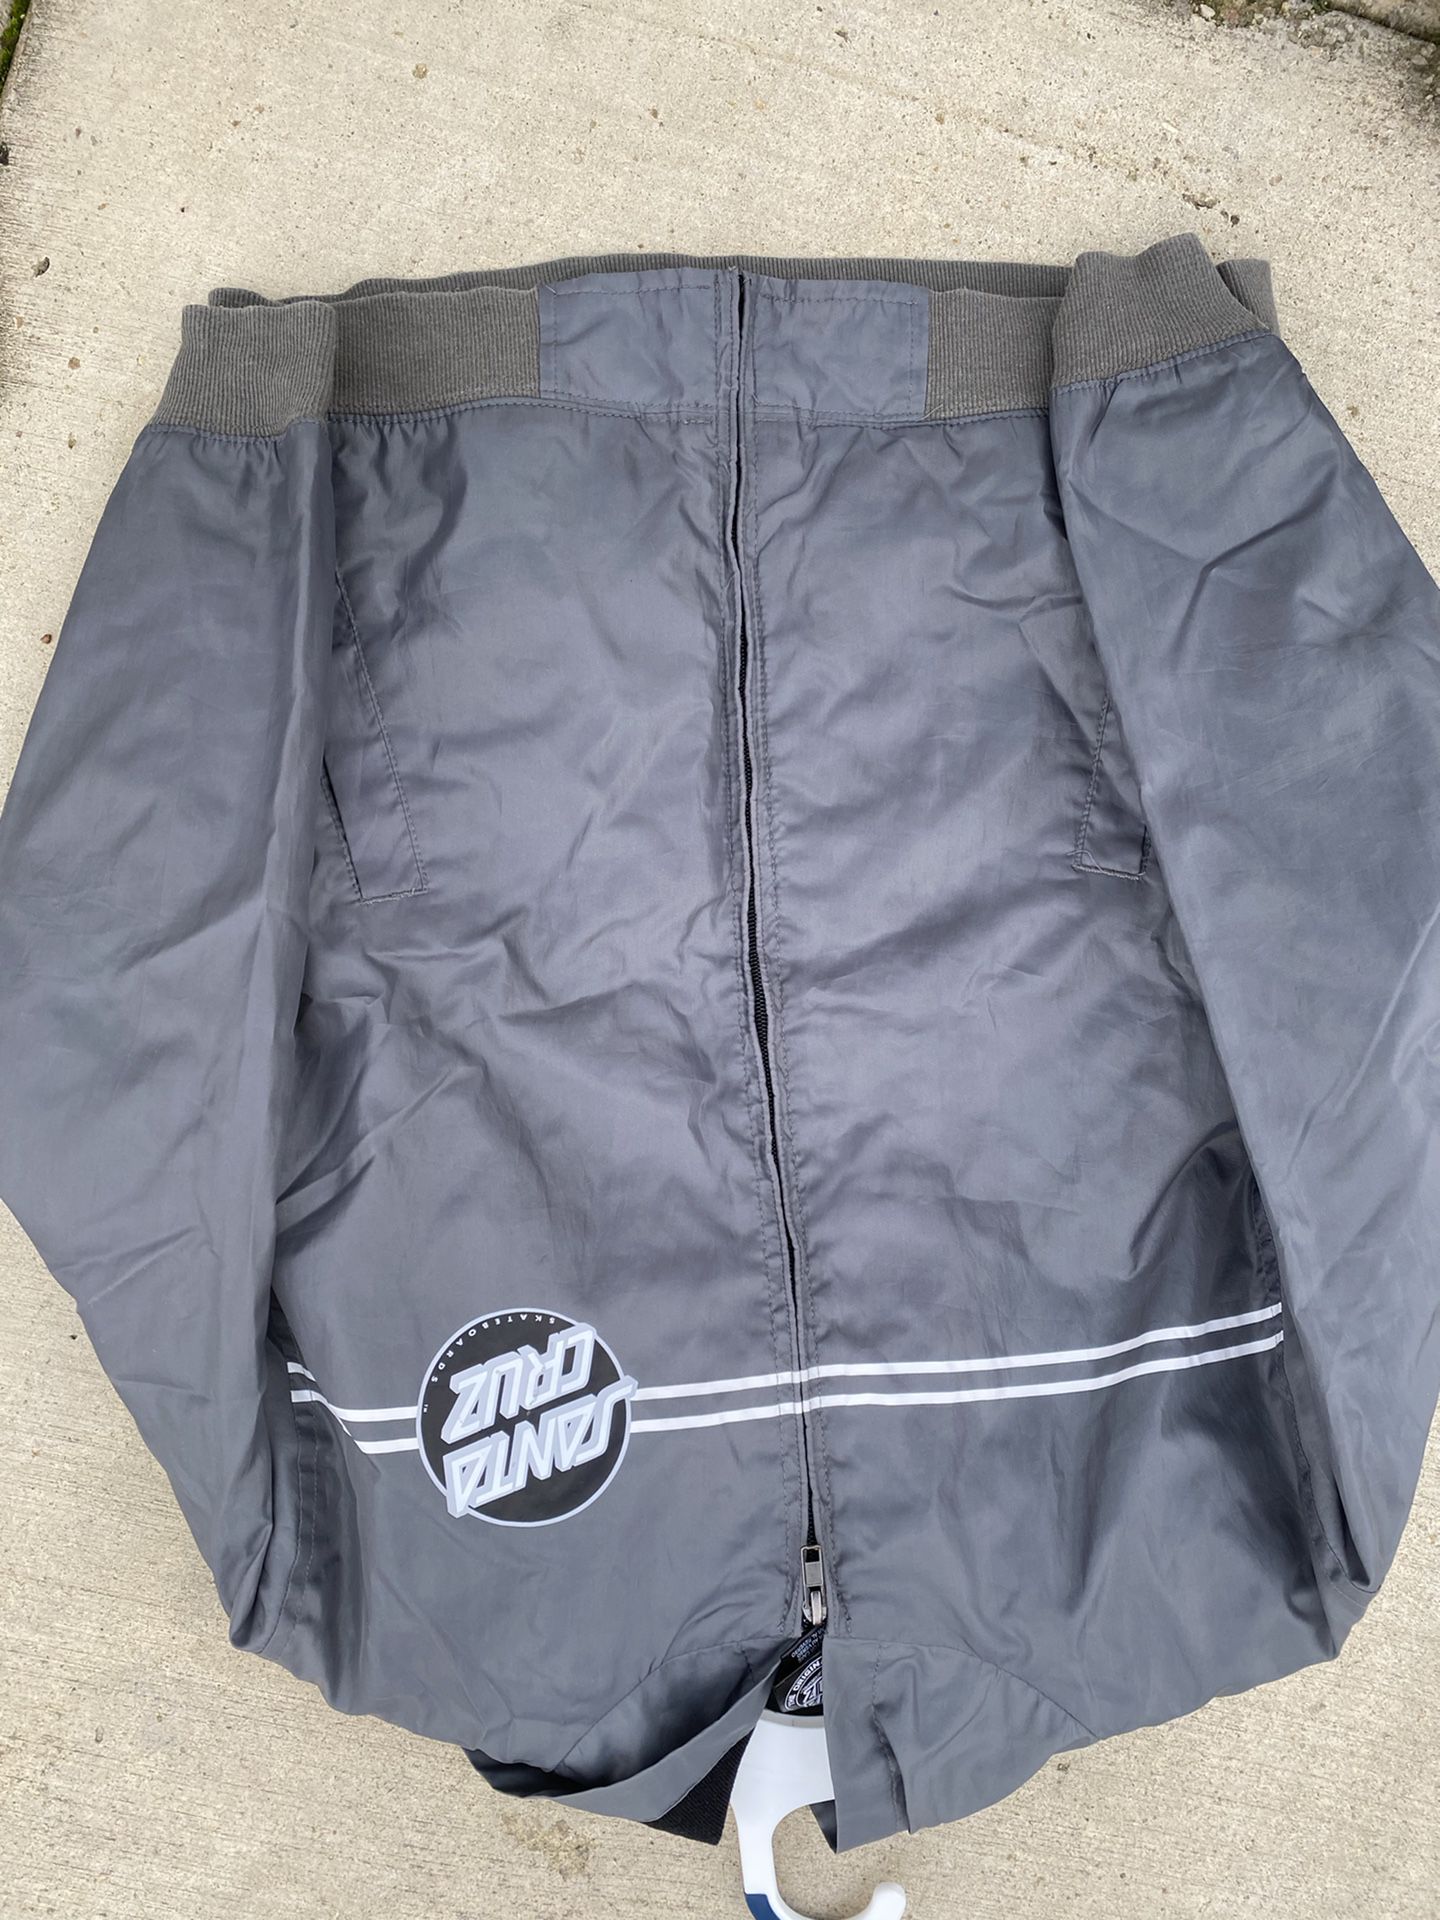 Santa Cruz Waterproof Jacket Size L Kids